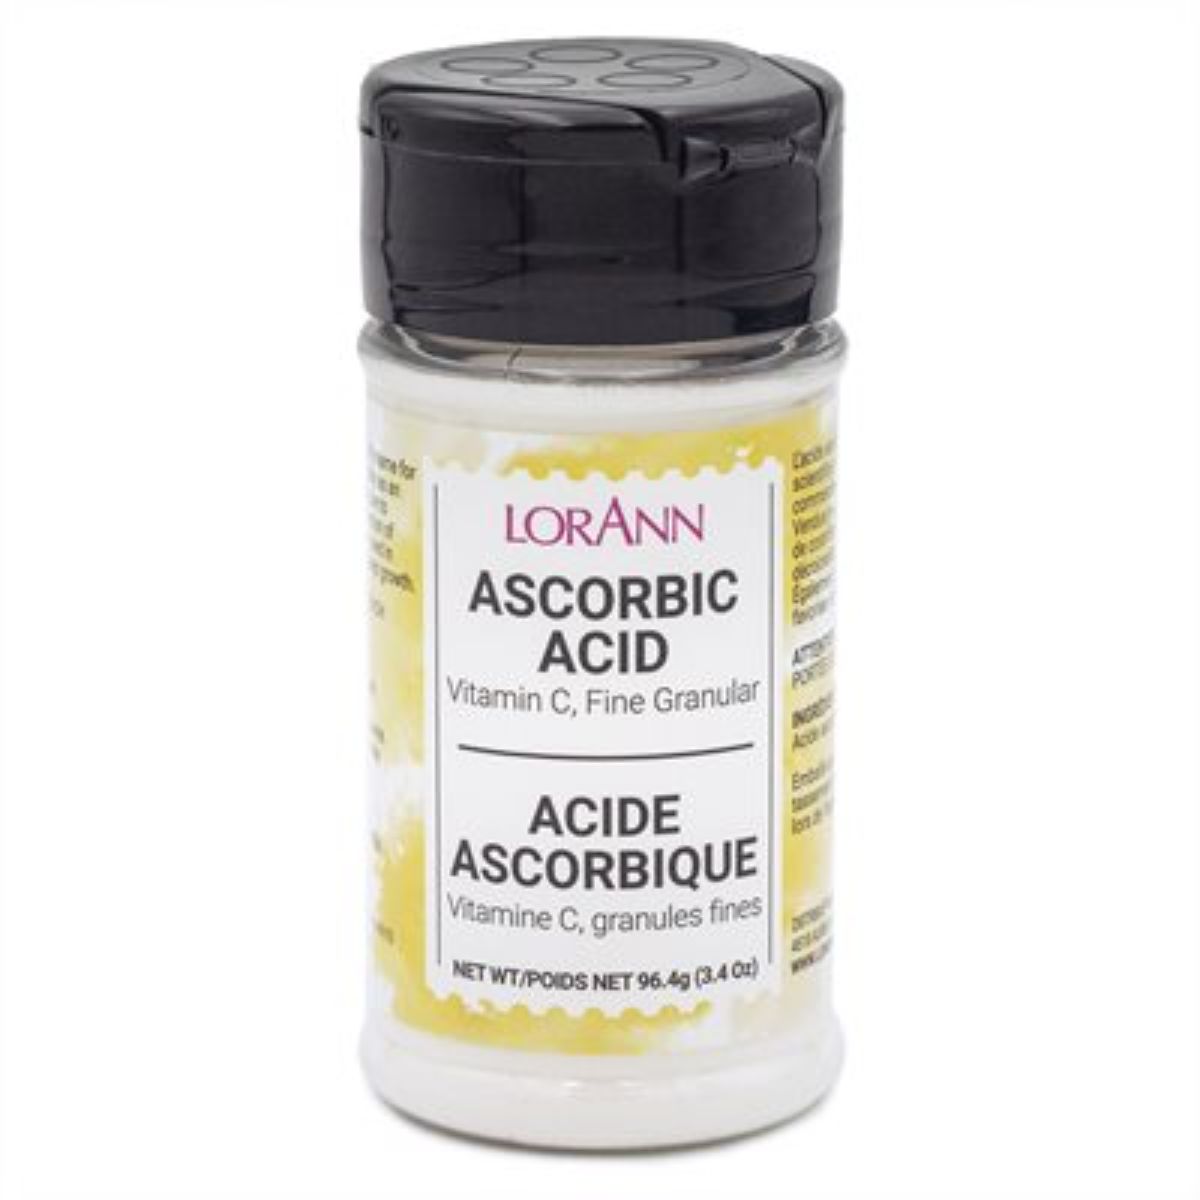 LorAnn Ascorbic Acid 3.4oz